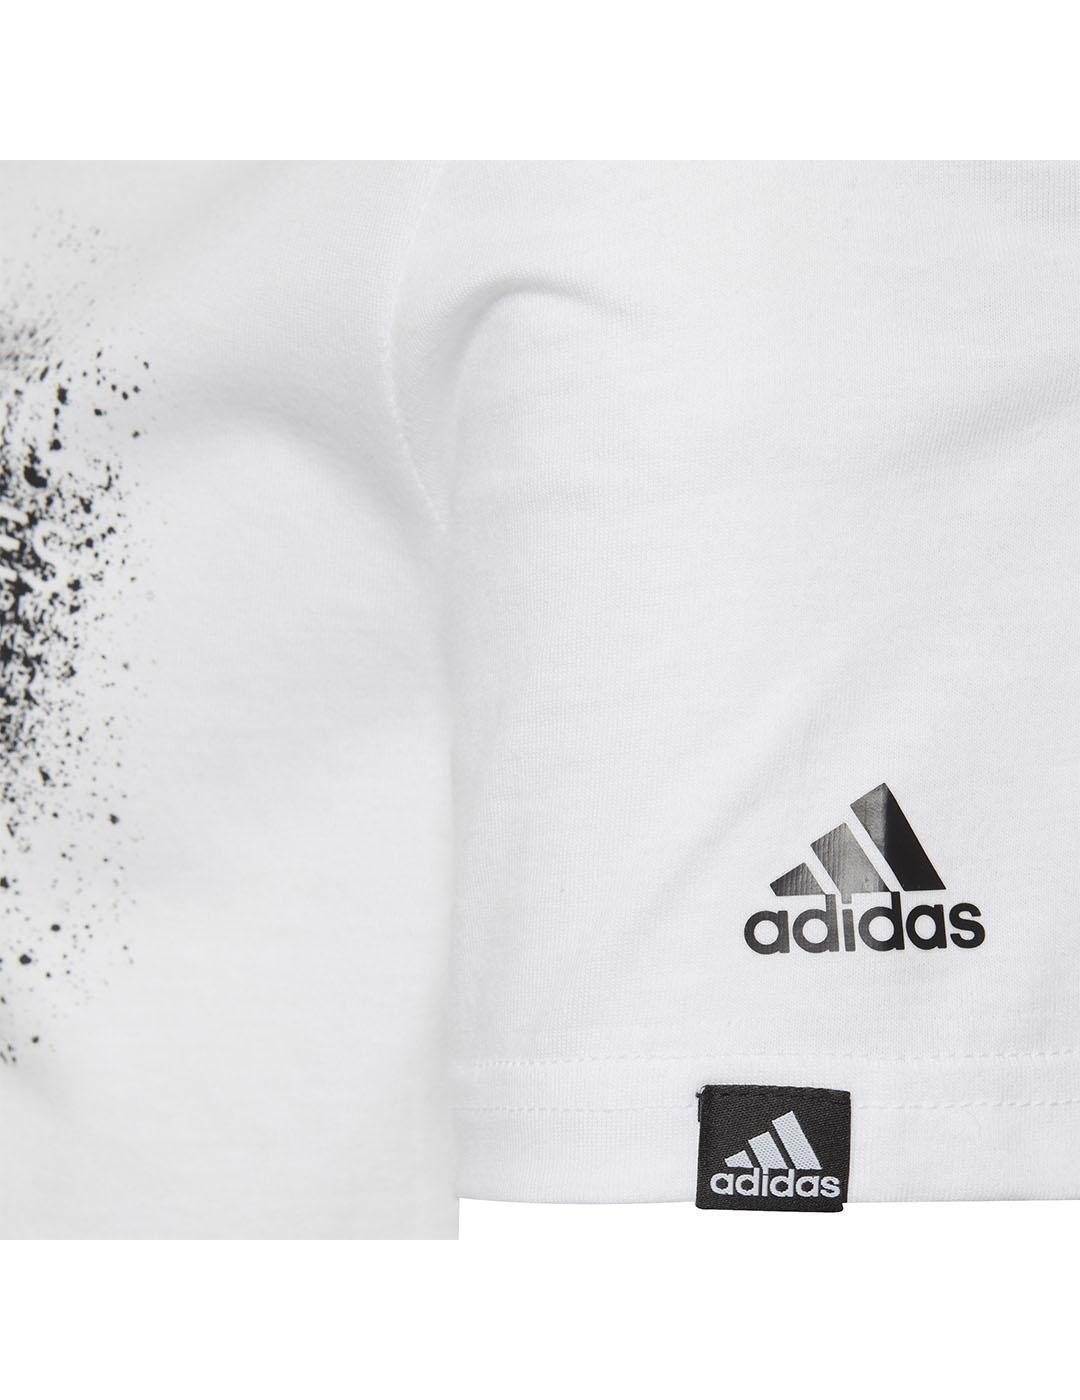 Camiseta Niño adidas Gfx Blanca